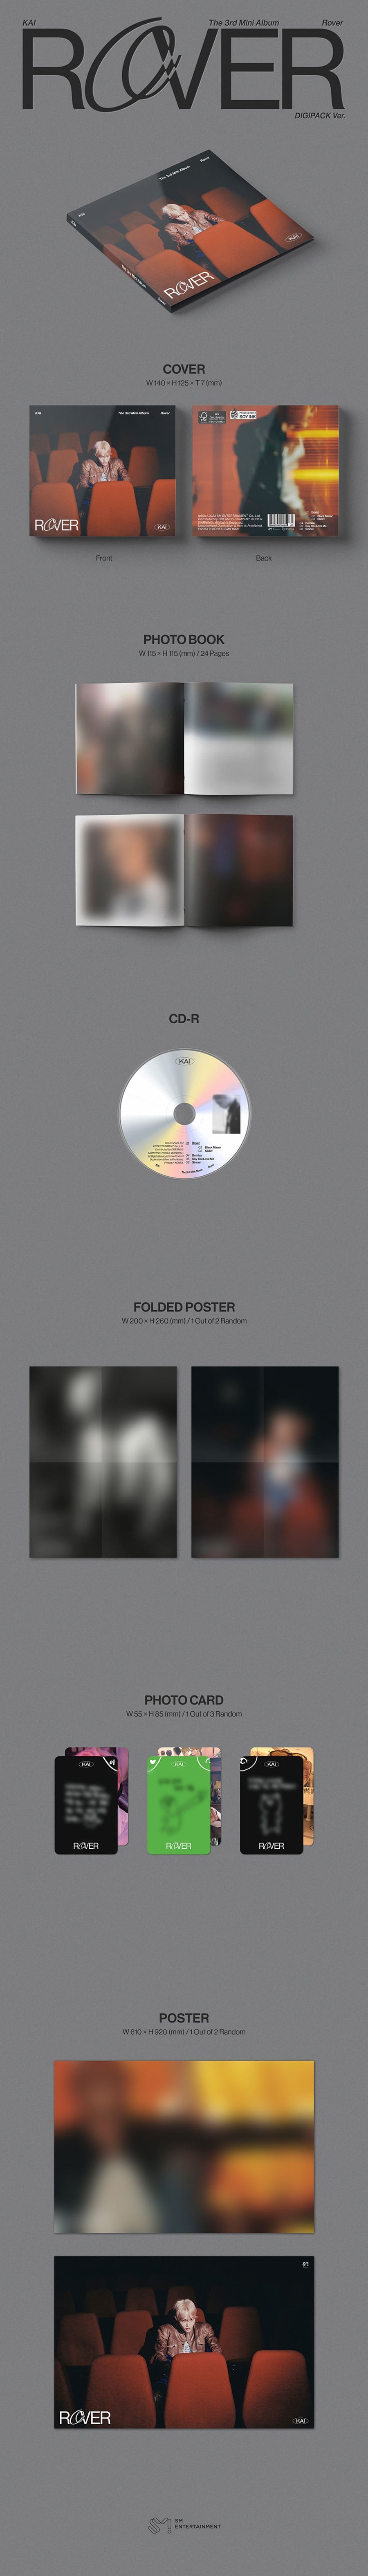 kai-3th-mini-album-rover-digipack-ver-wholesales